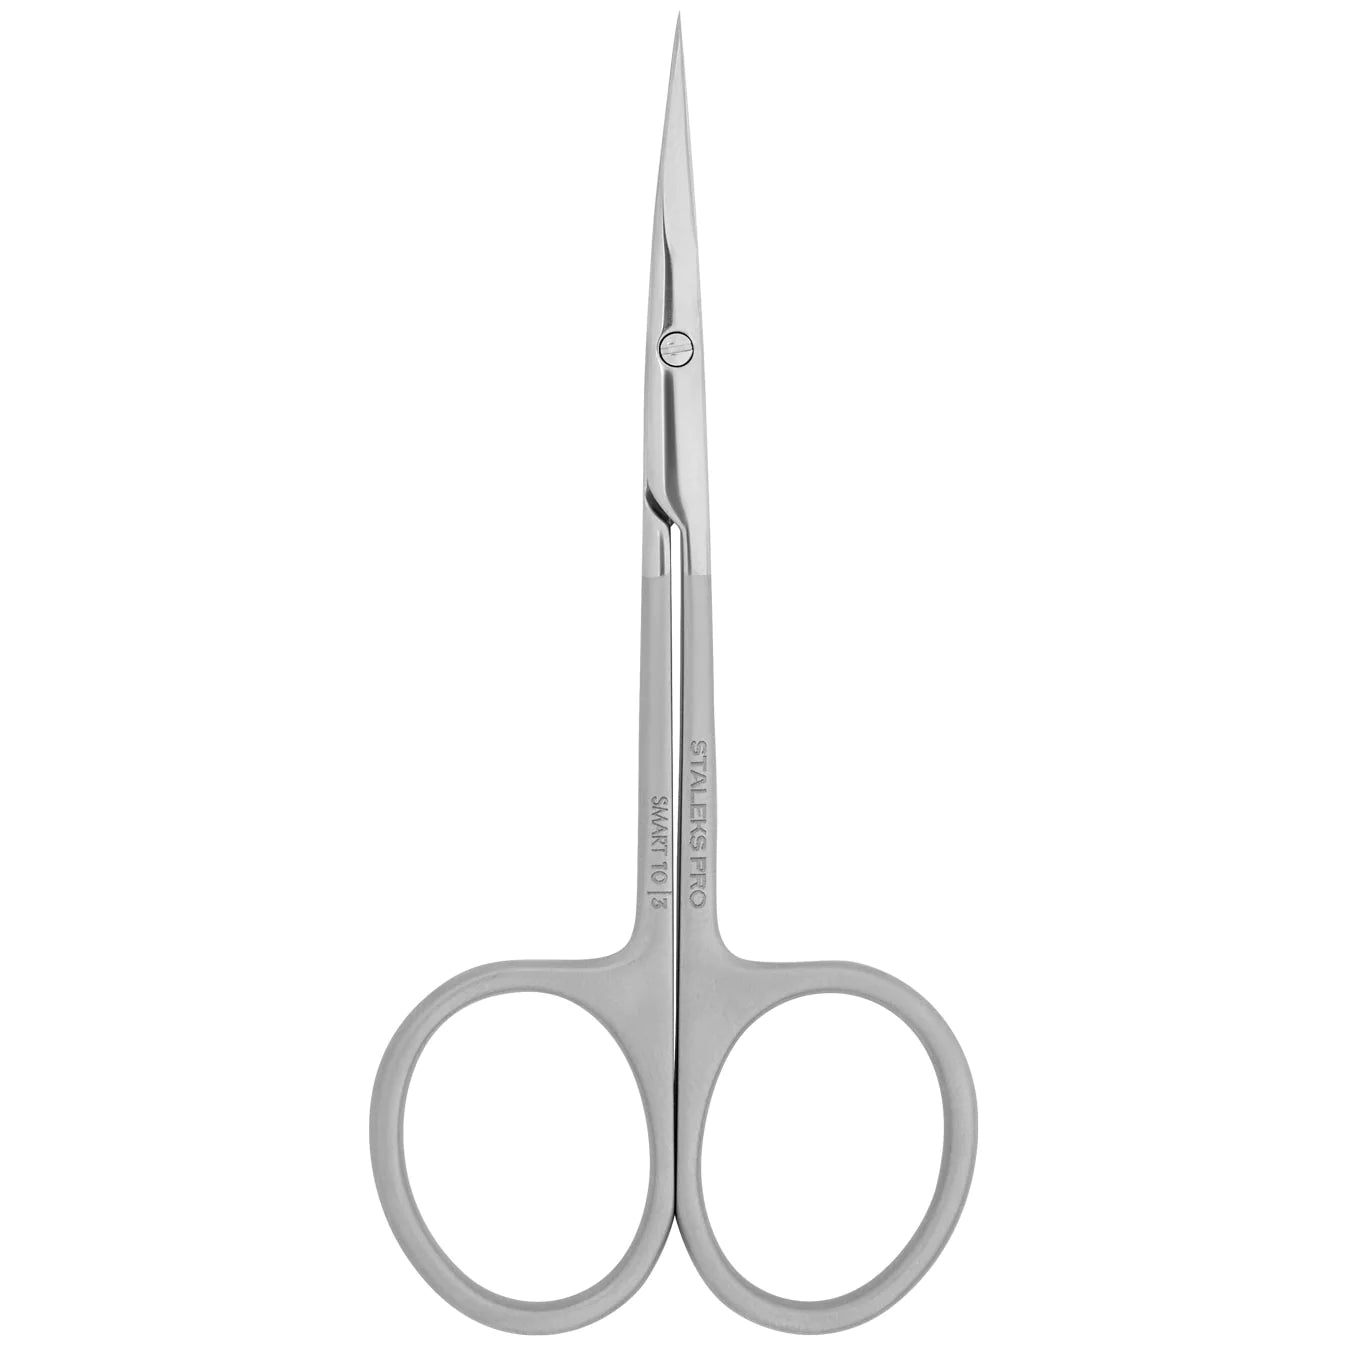 Professional cuticle scissors SMART 10 TYPE 3 -SS-10/3